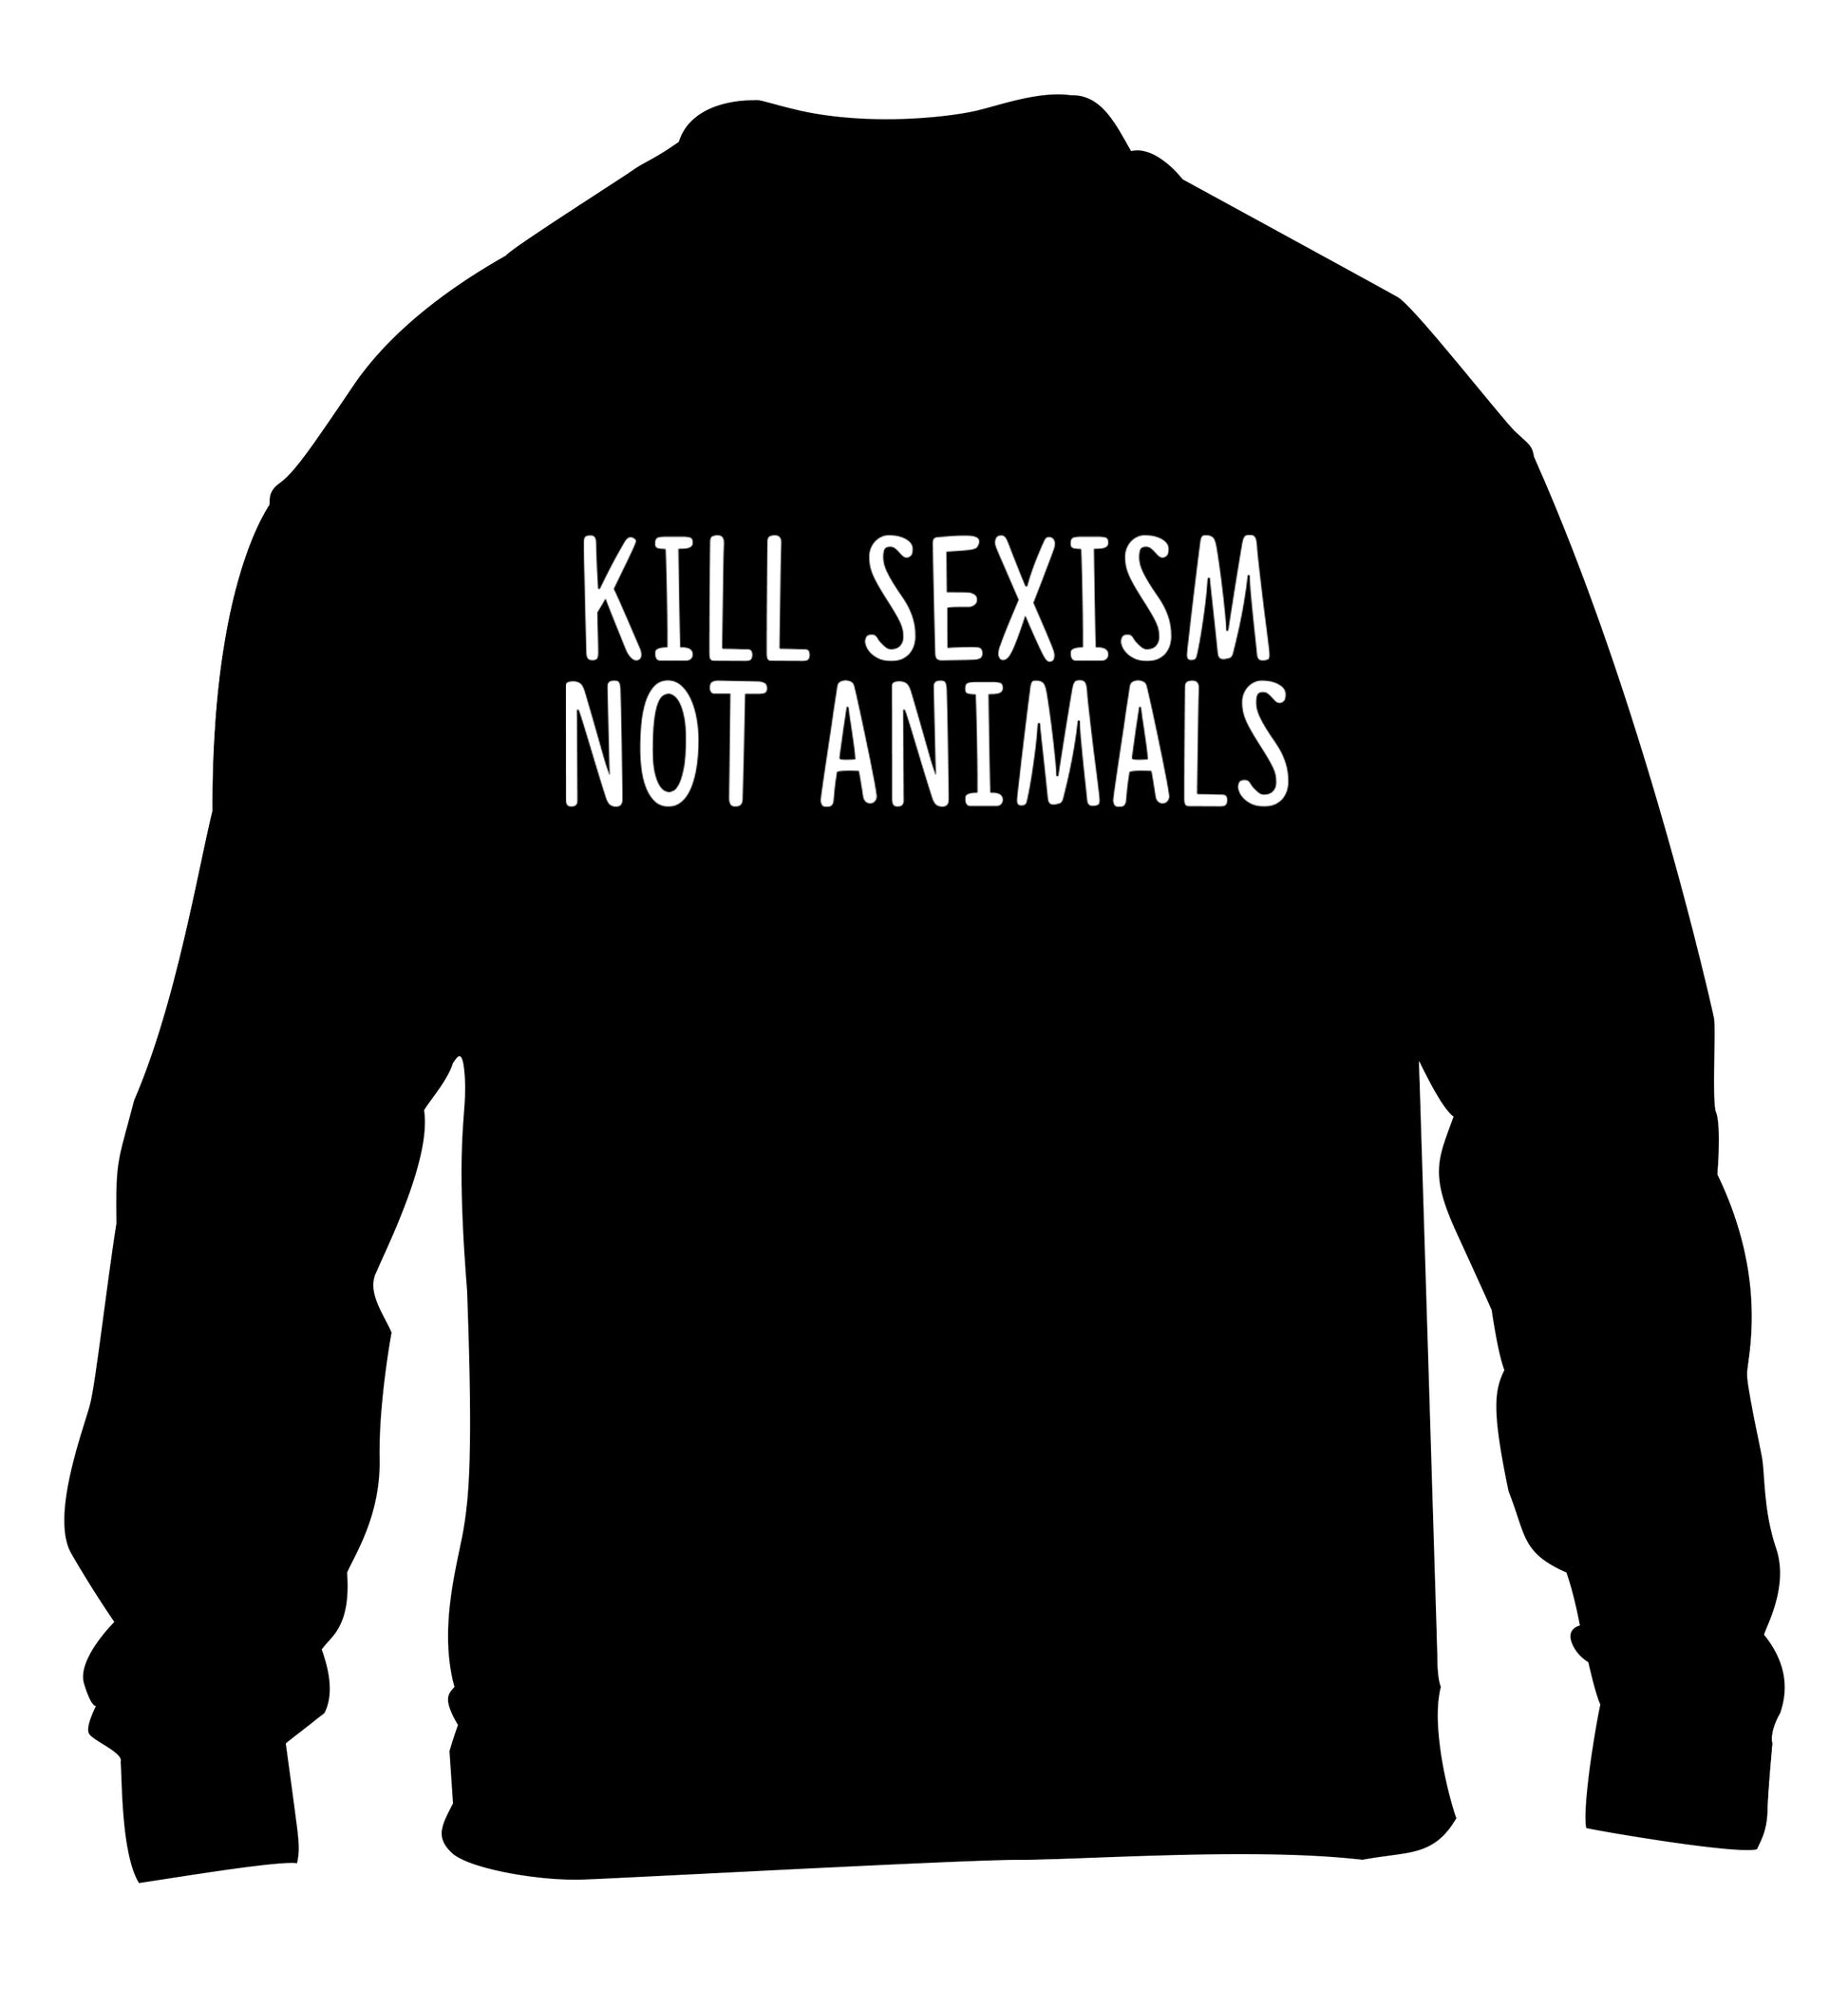 Kill Sexism Not Animals children's black sweater 12-13 Years